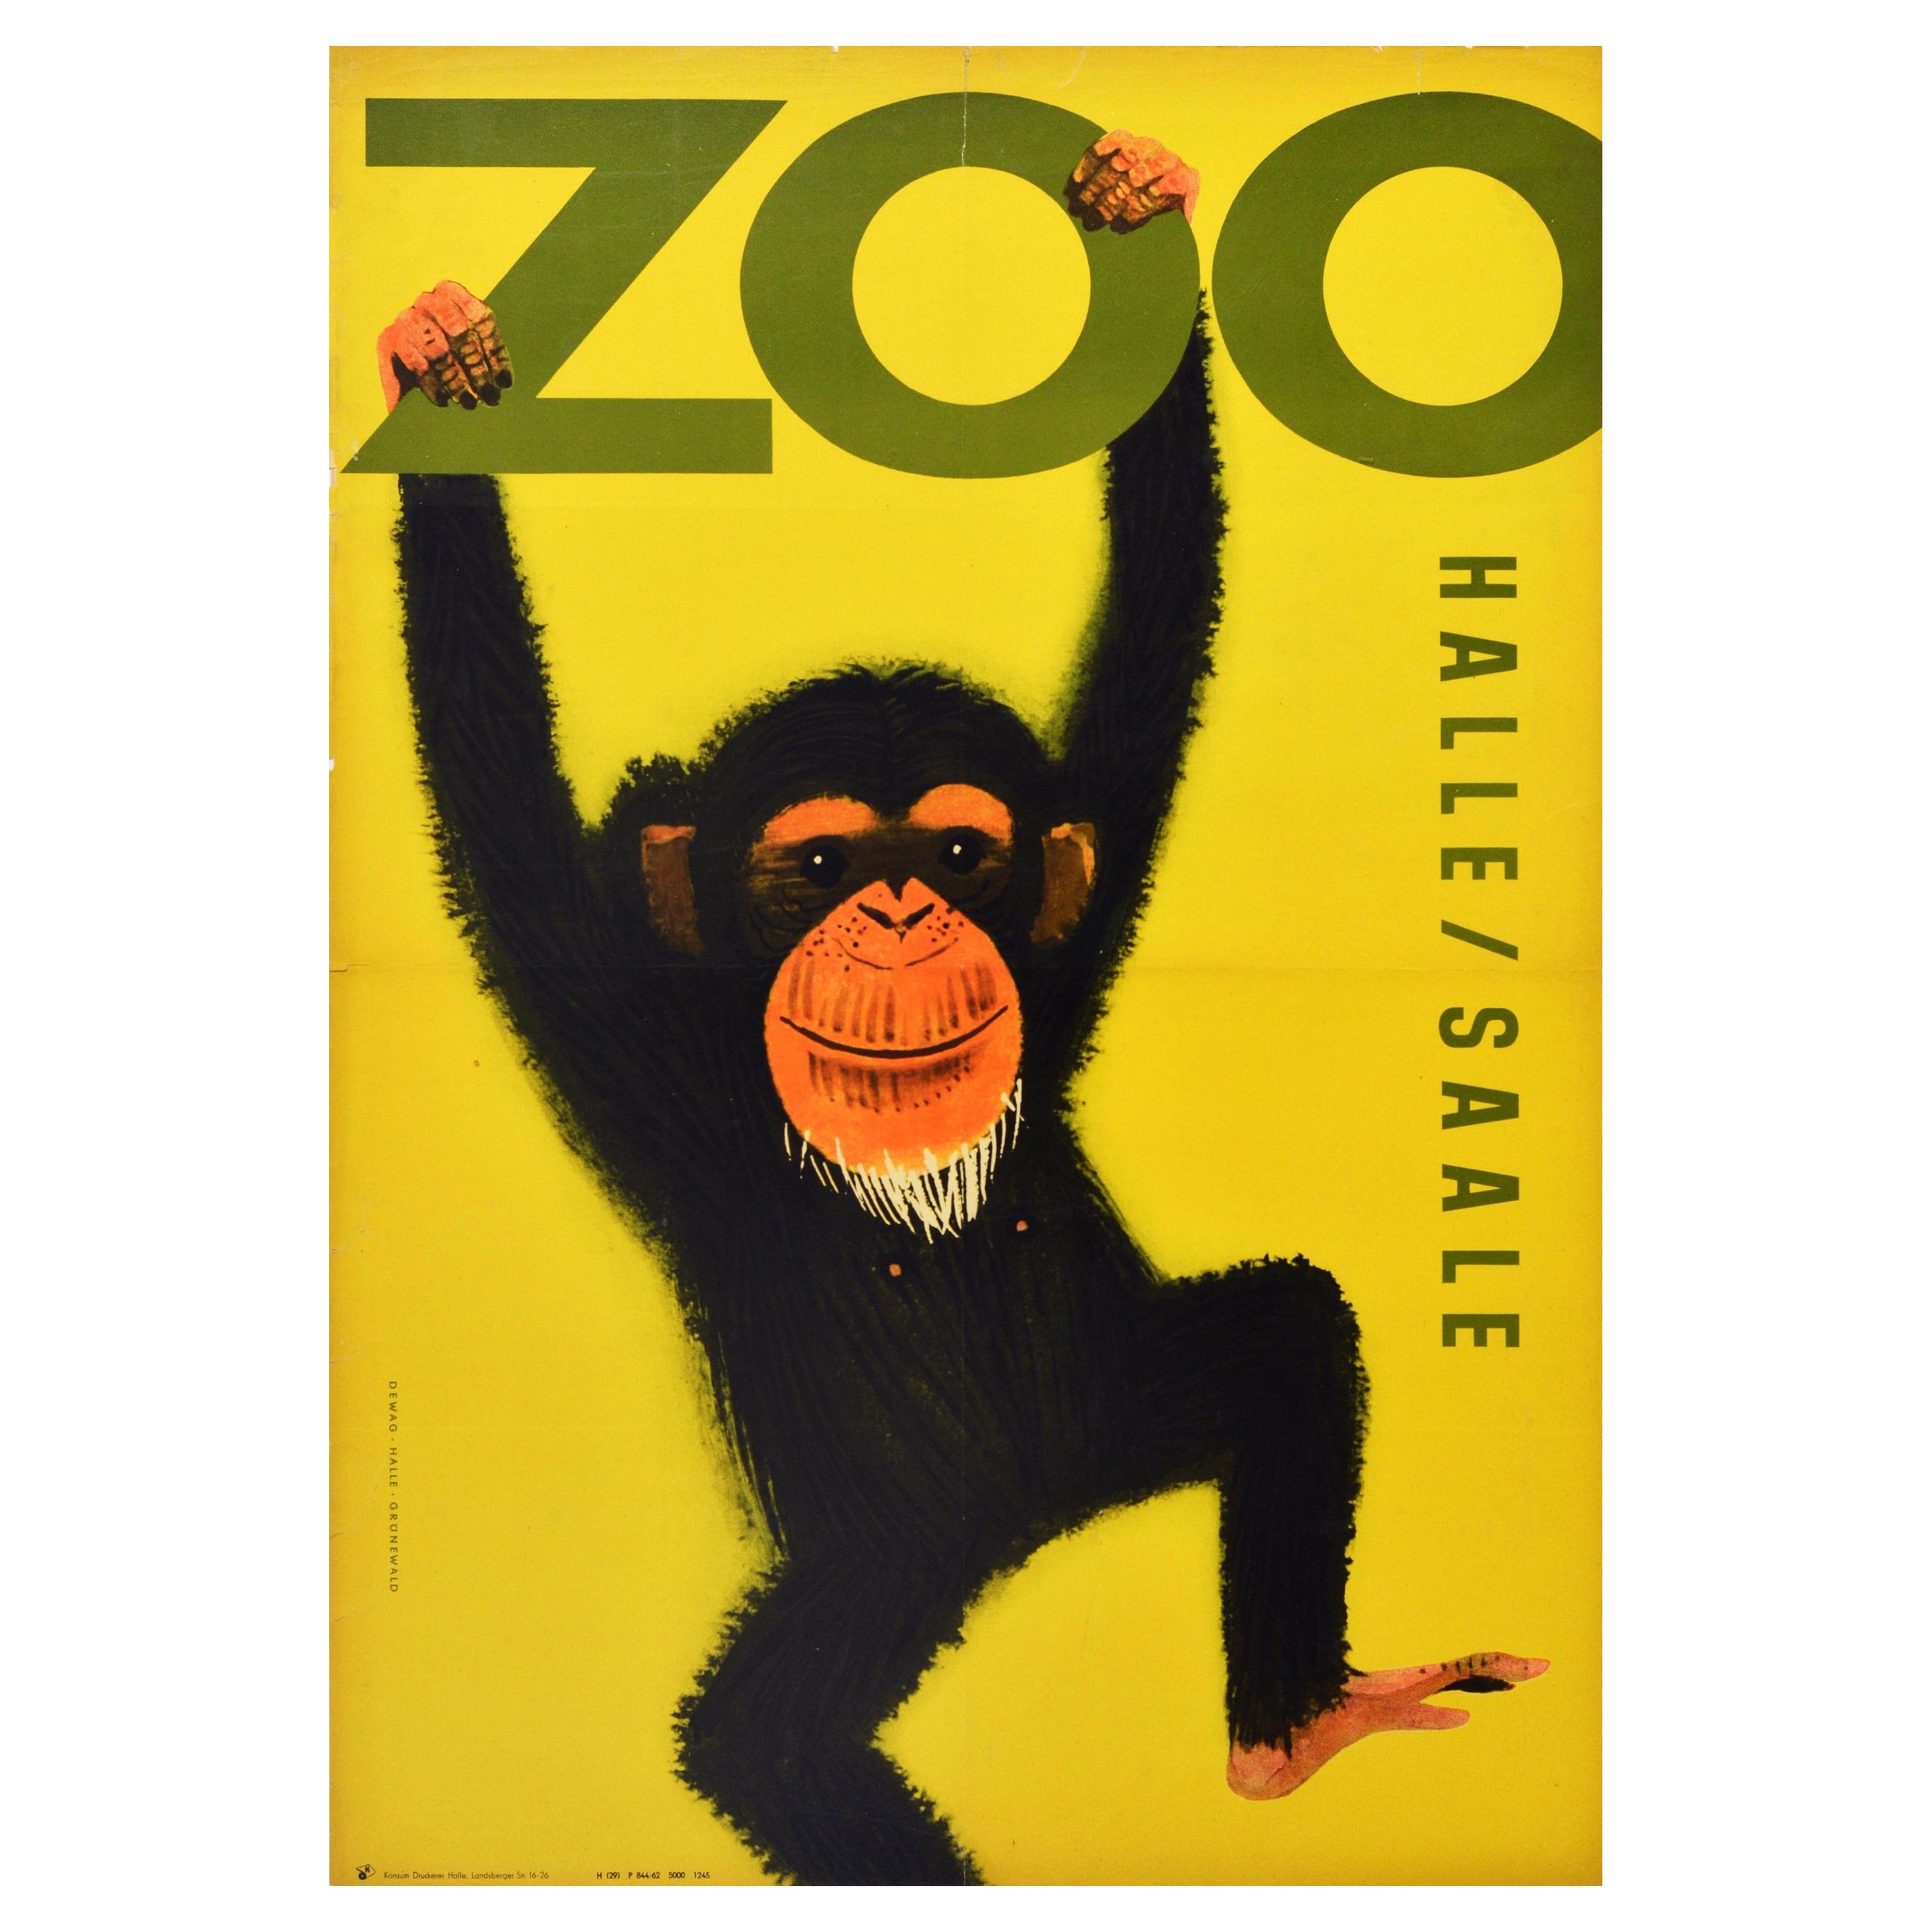 Original Vintage Poster Halle Saale Zoo Germany Chimpanzee Monkey Design Artwork For Sale